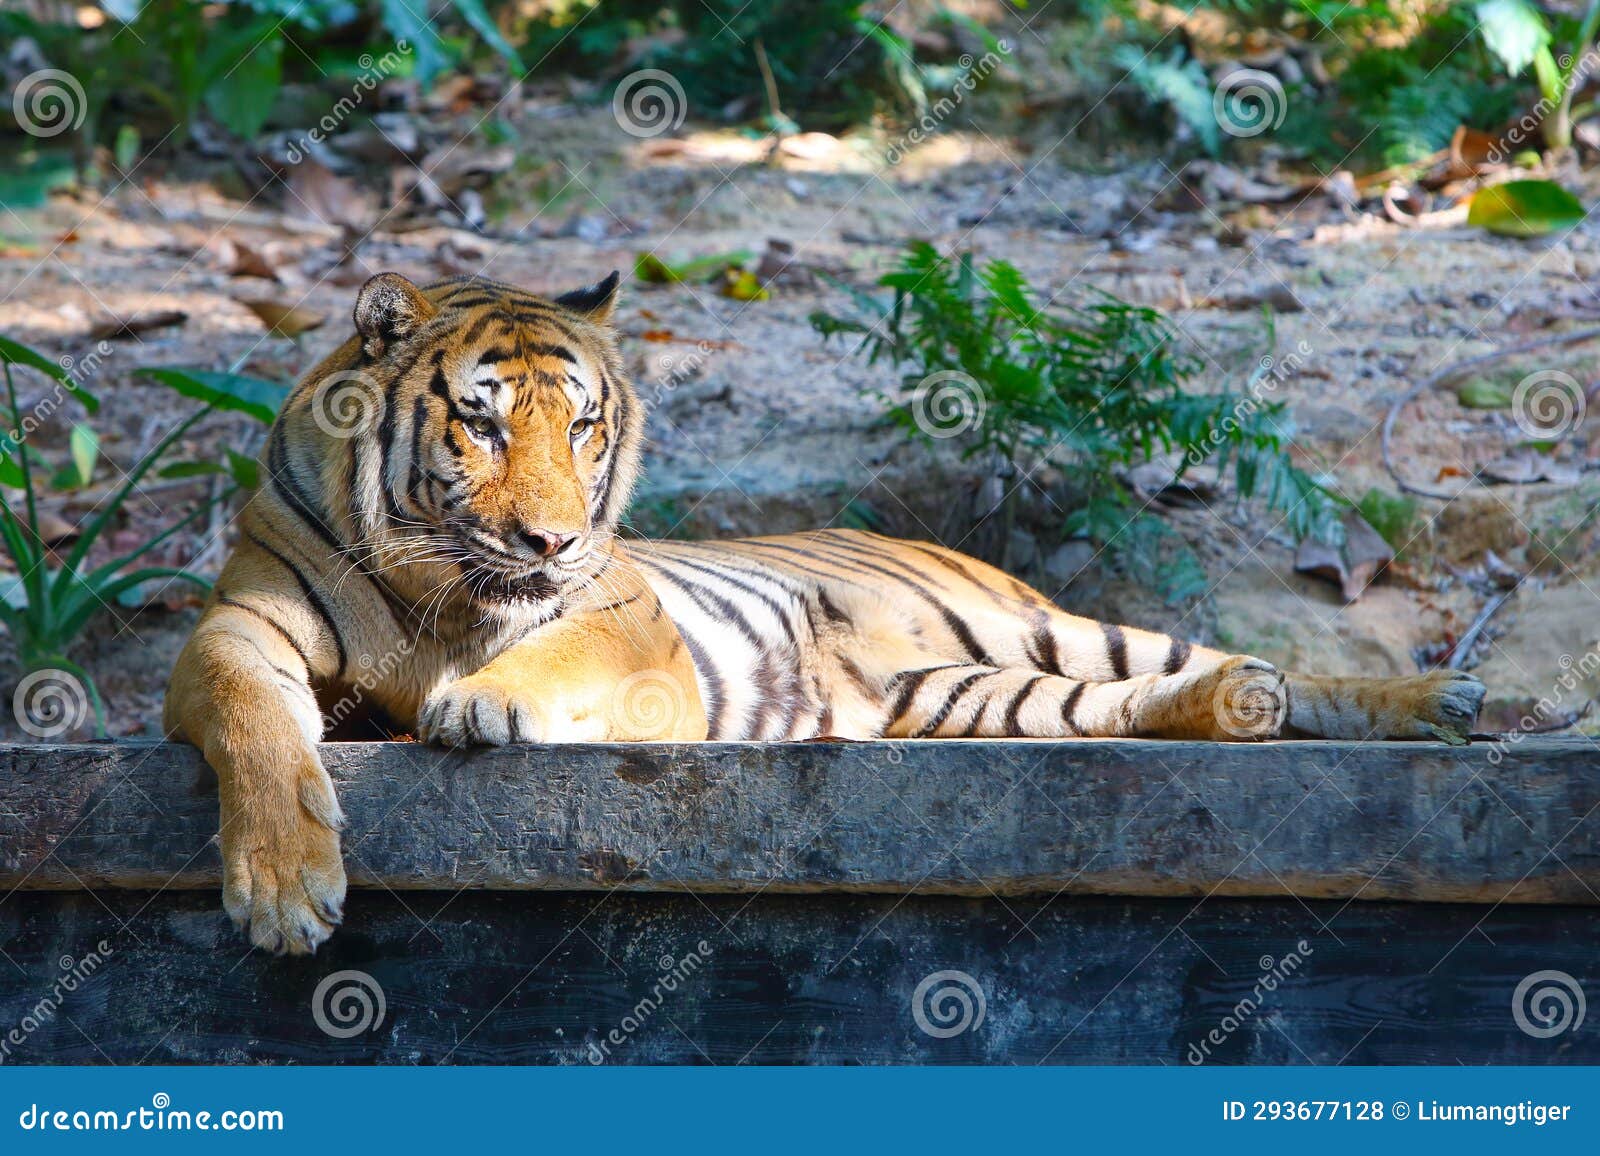 south china tiger lies down and enjoys the sunshine